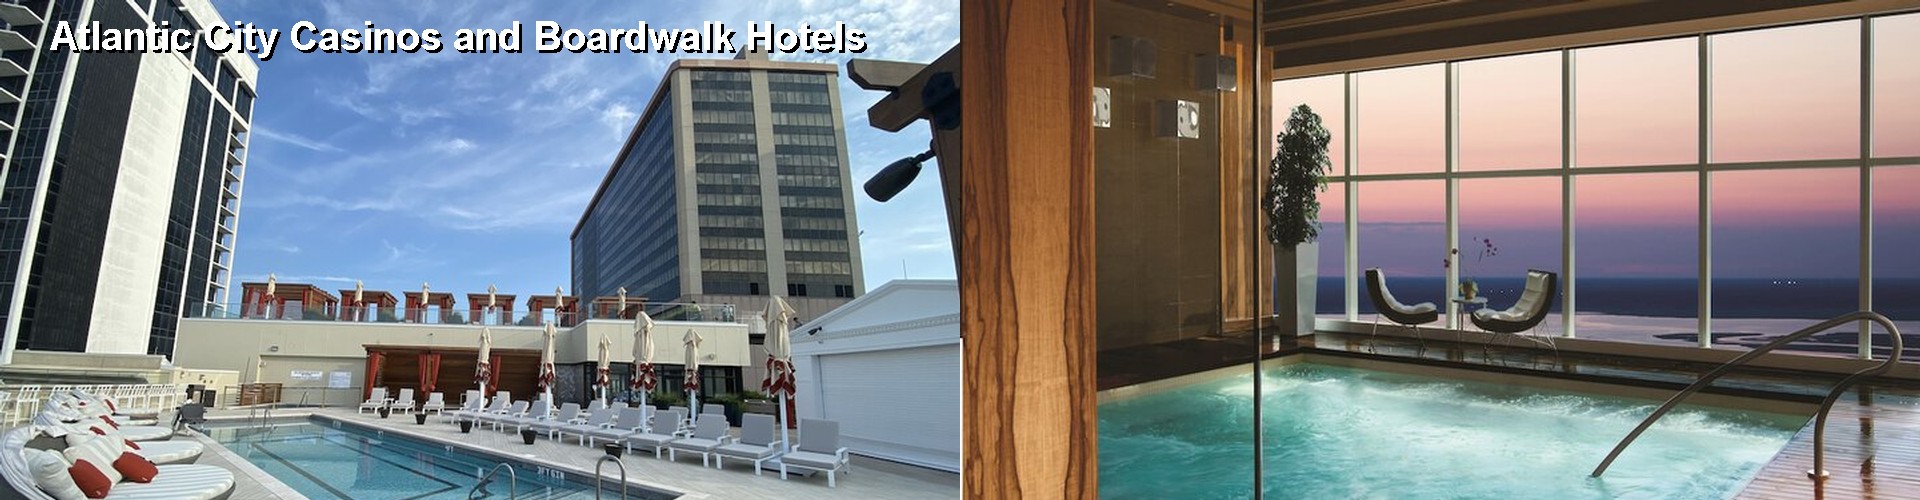 5 Best Hotels near Atlantic City Casinos and Boardwalk